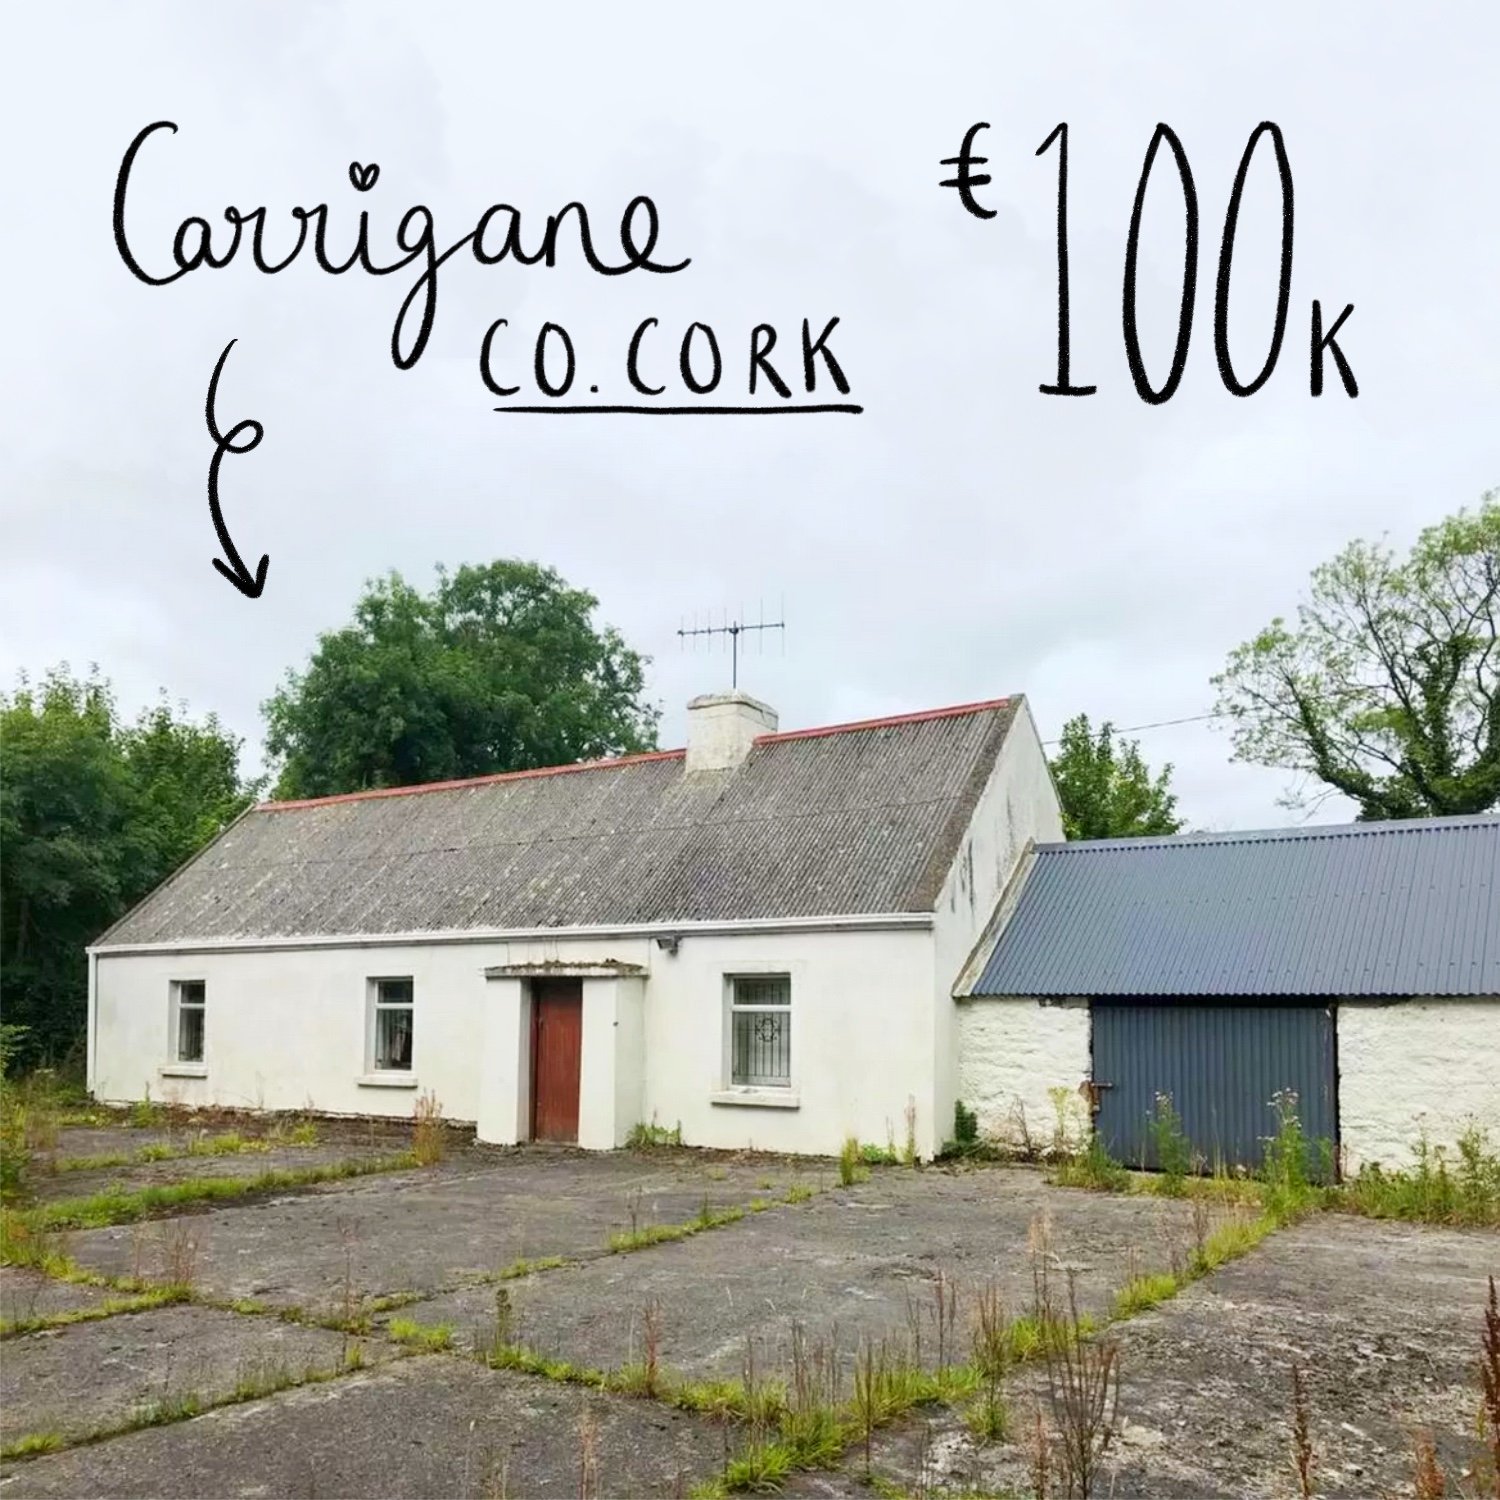 Carrigane, Co. Cork. €100k